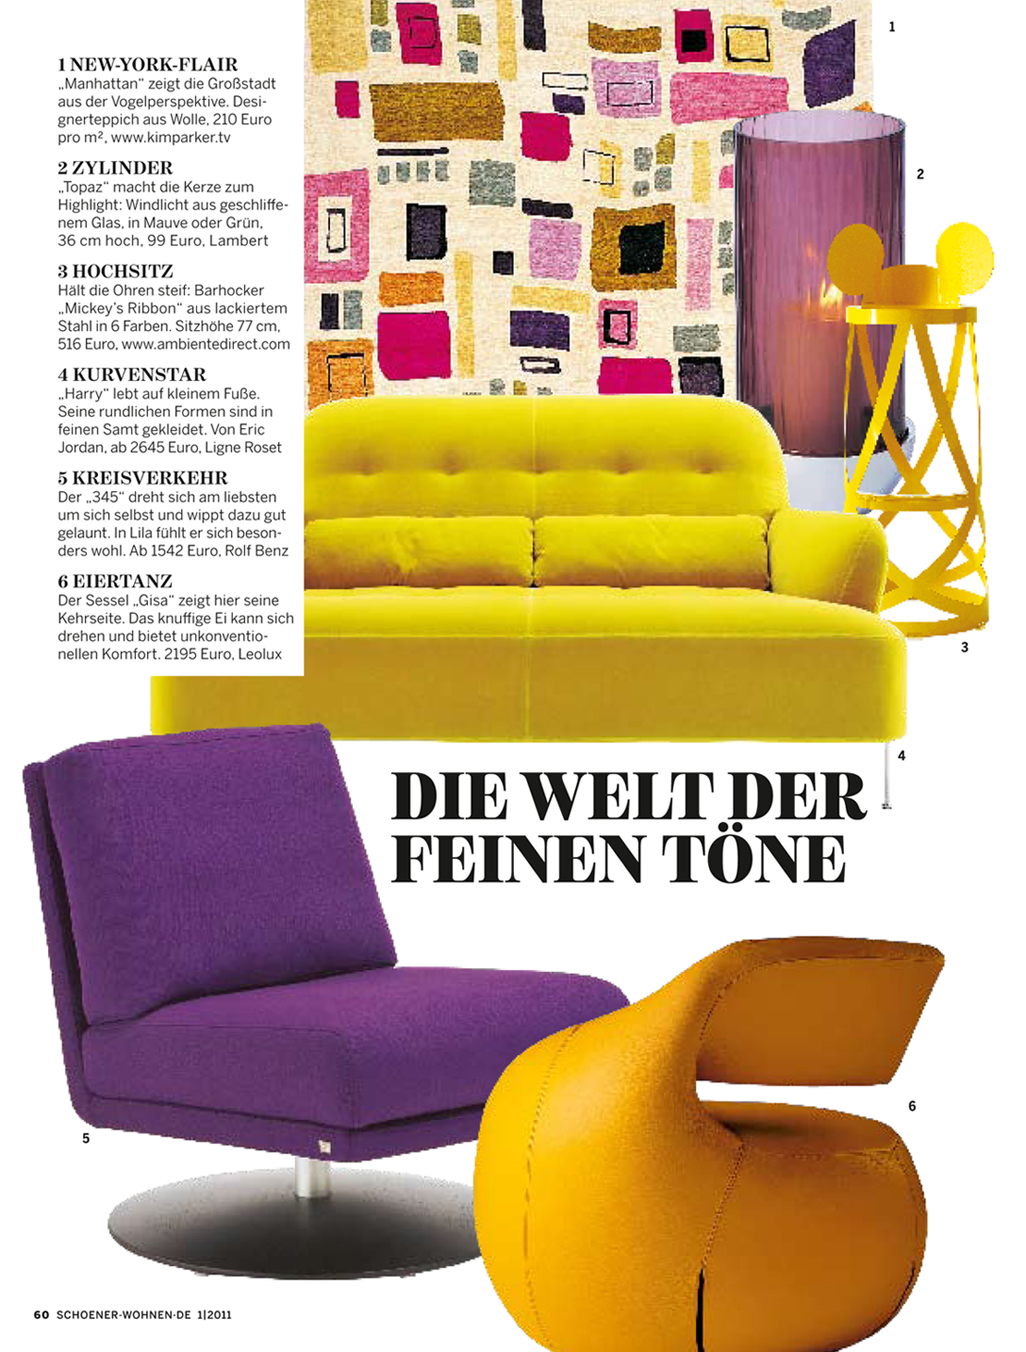 "Schoner Wohnen" features the Manhattan designer rug from the Kim Parker Home collection